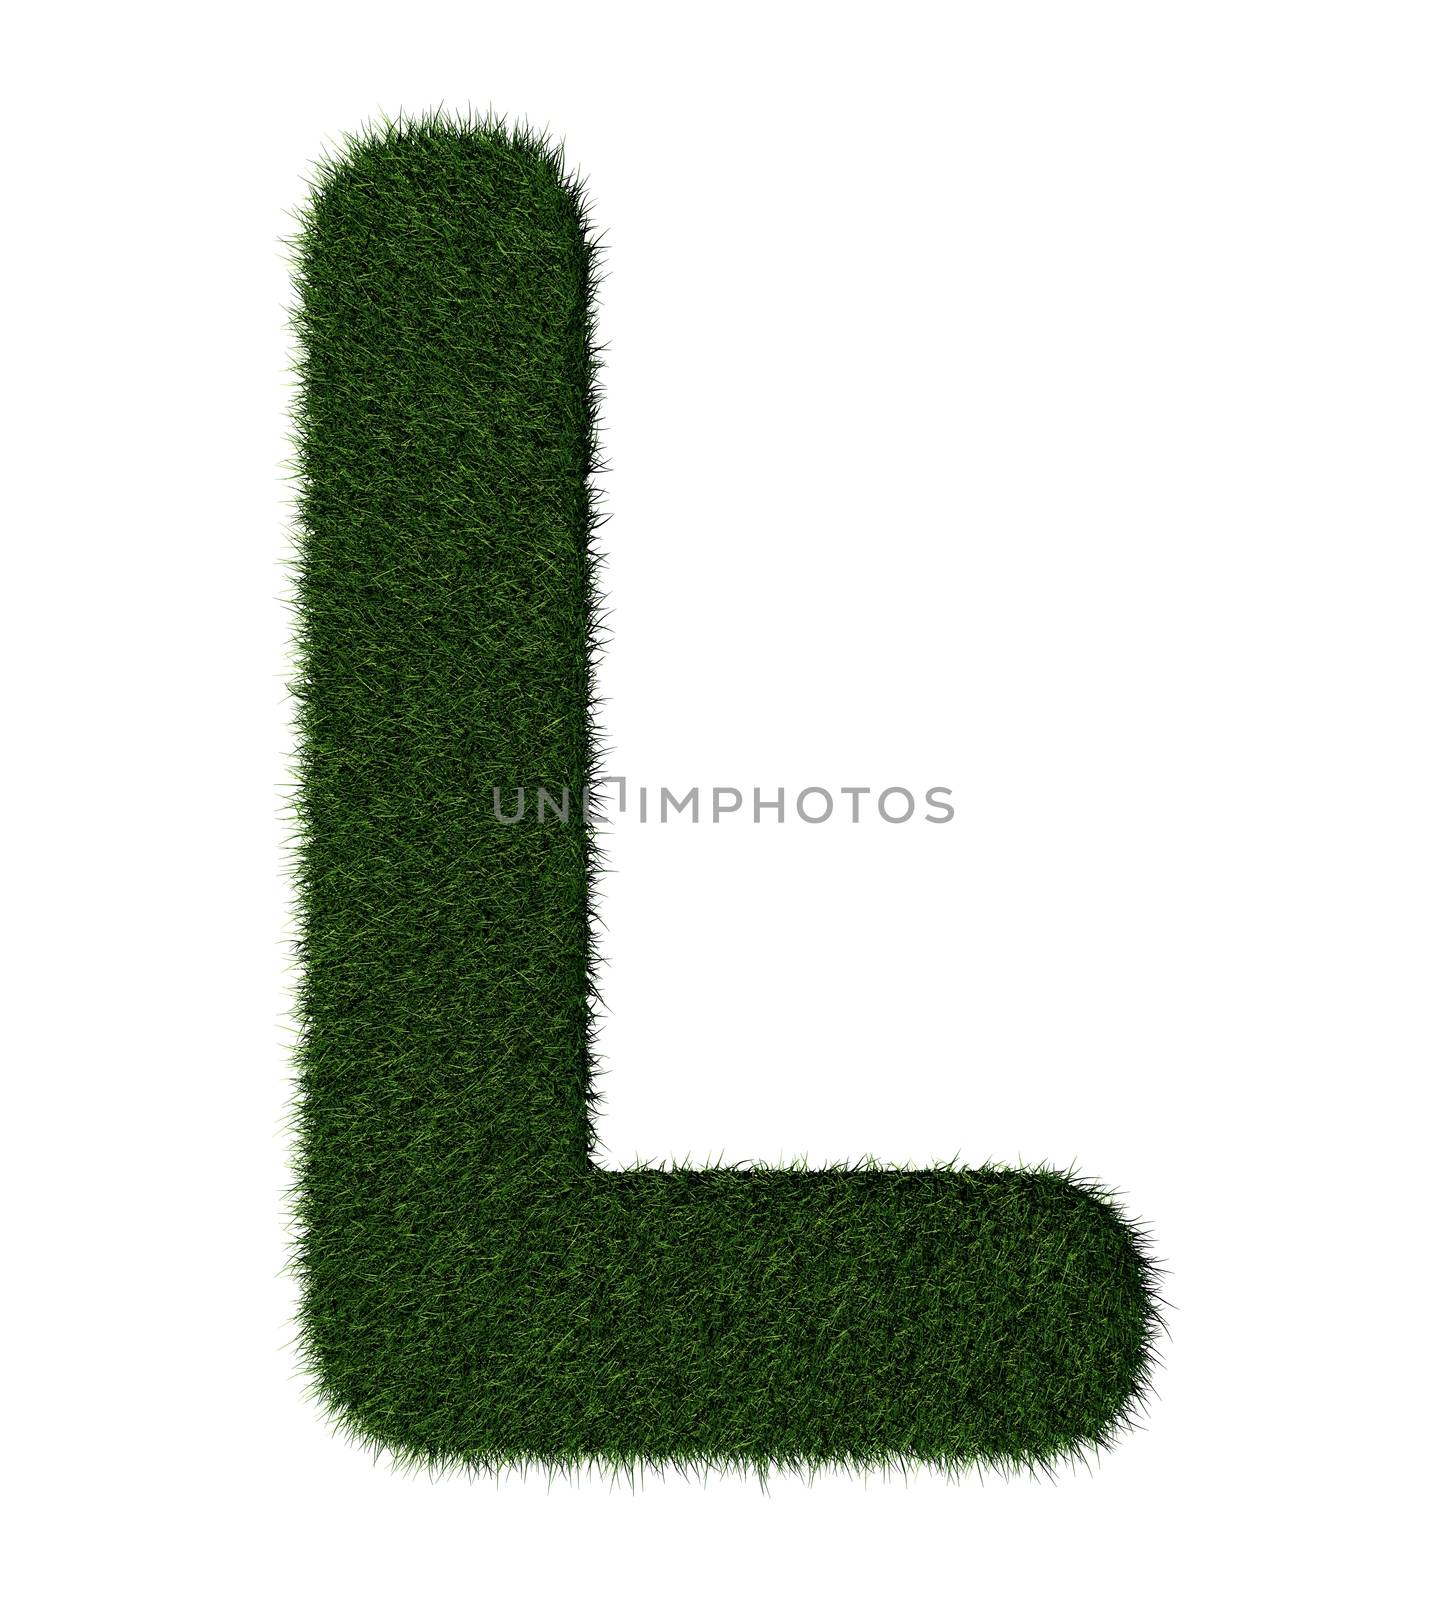 Grass alphabet - L by midani